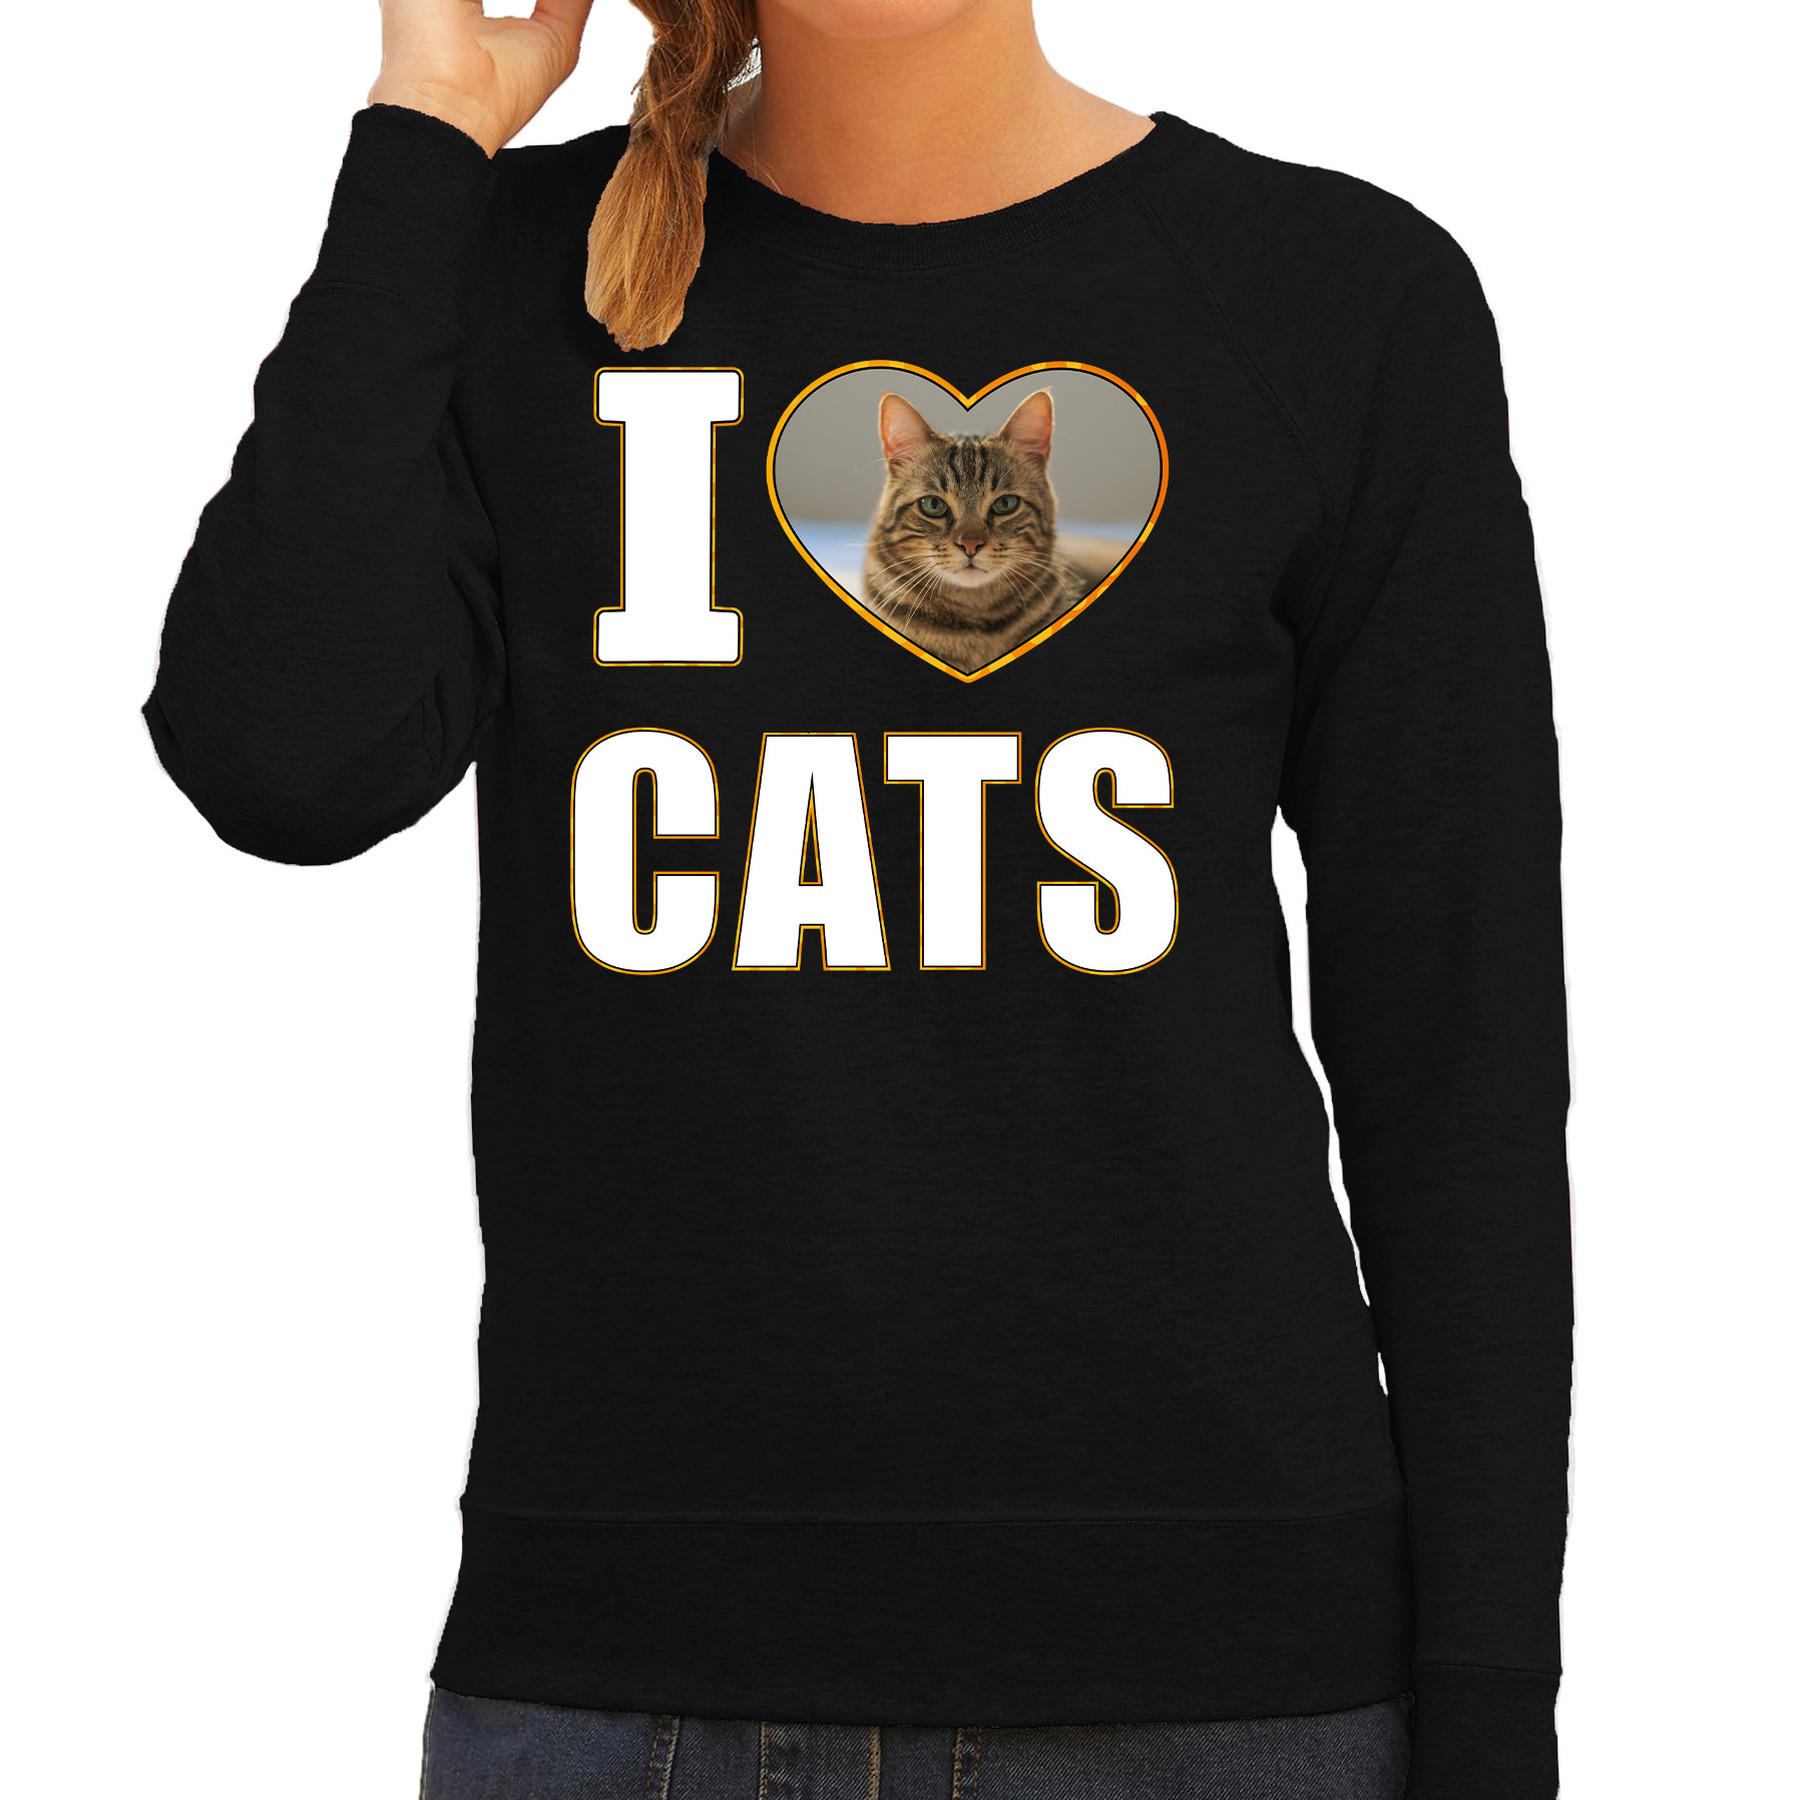 I love cats foto trui zwart voor dames cadeau sweater katten liefhebber